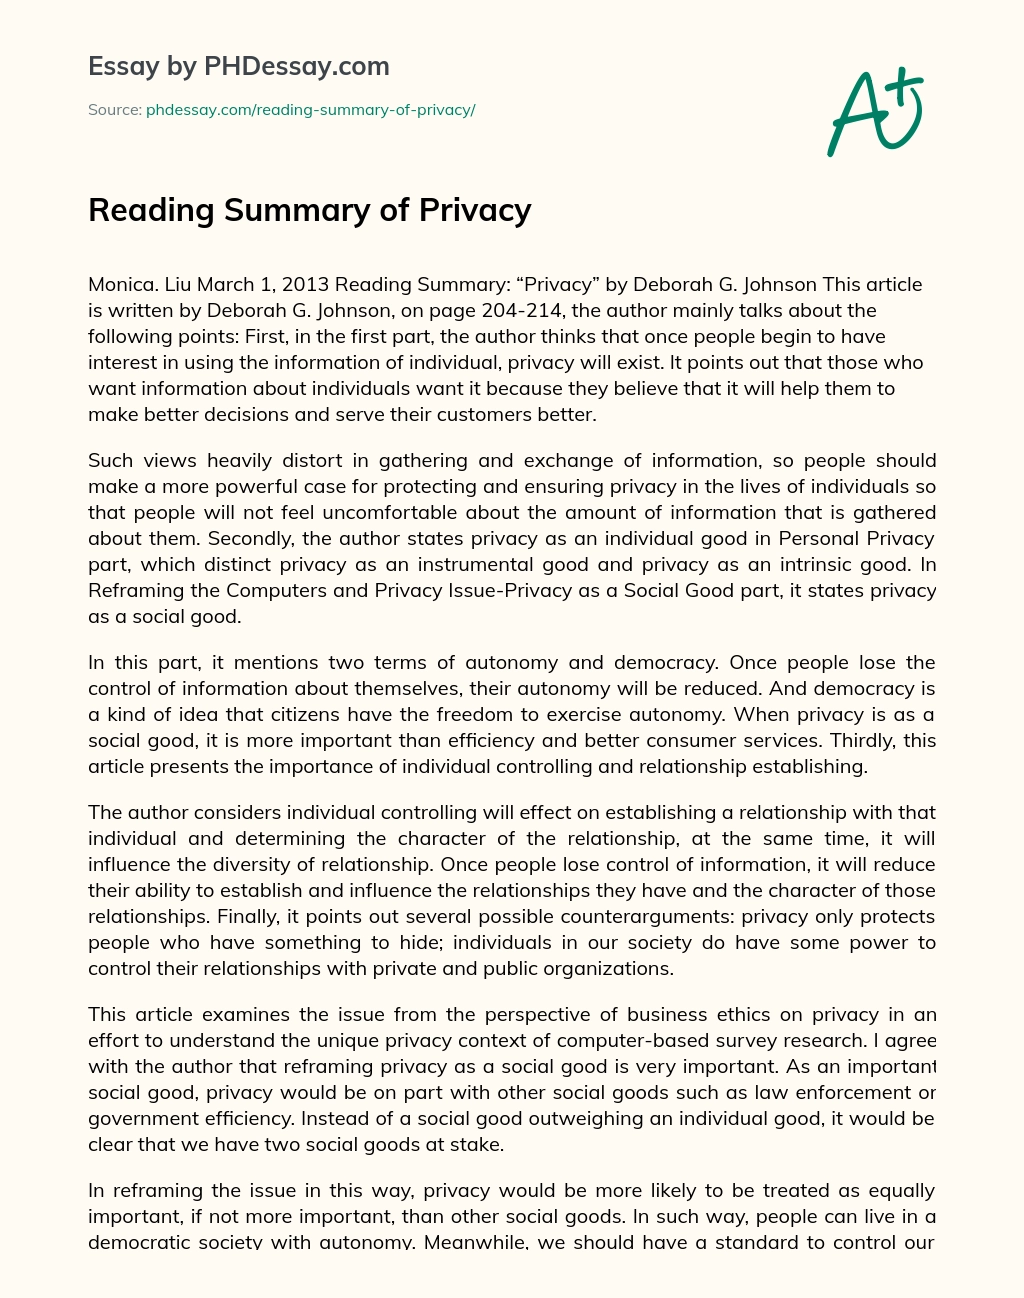 Reading Summary of Privacy essay